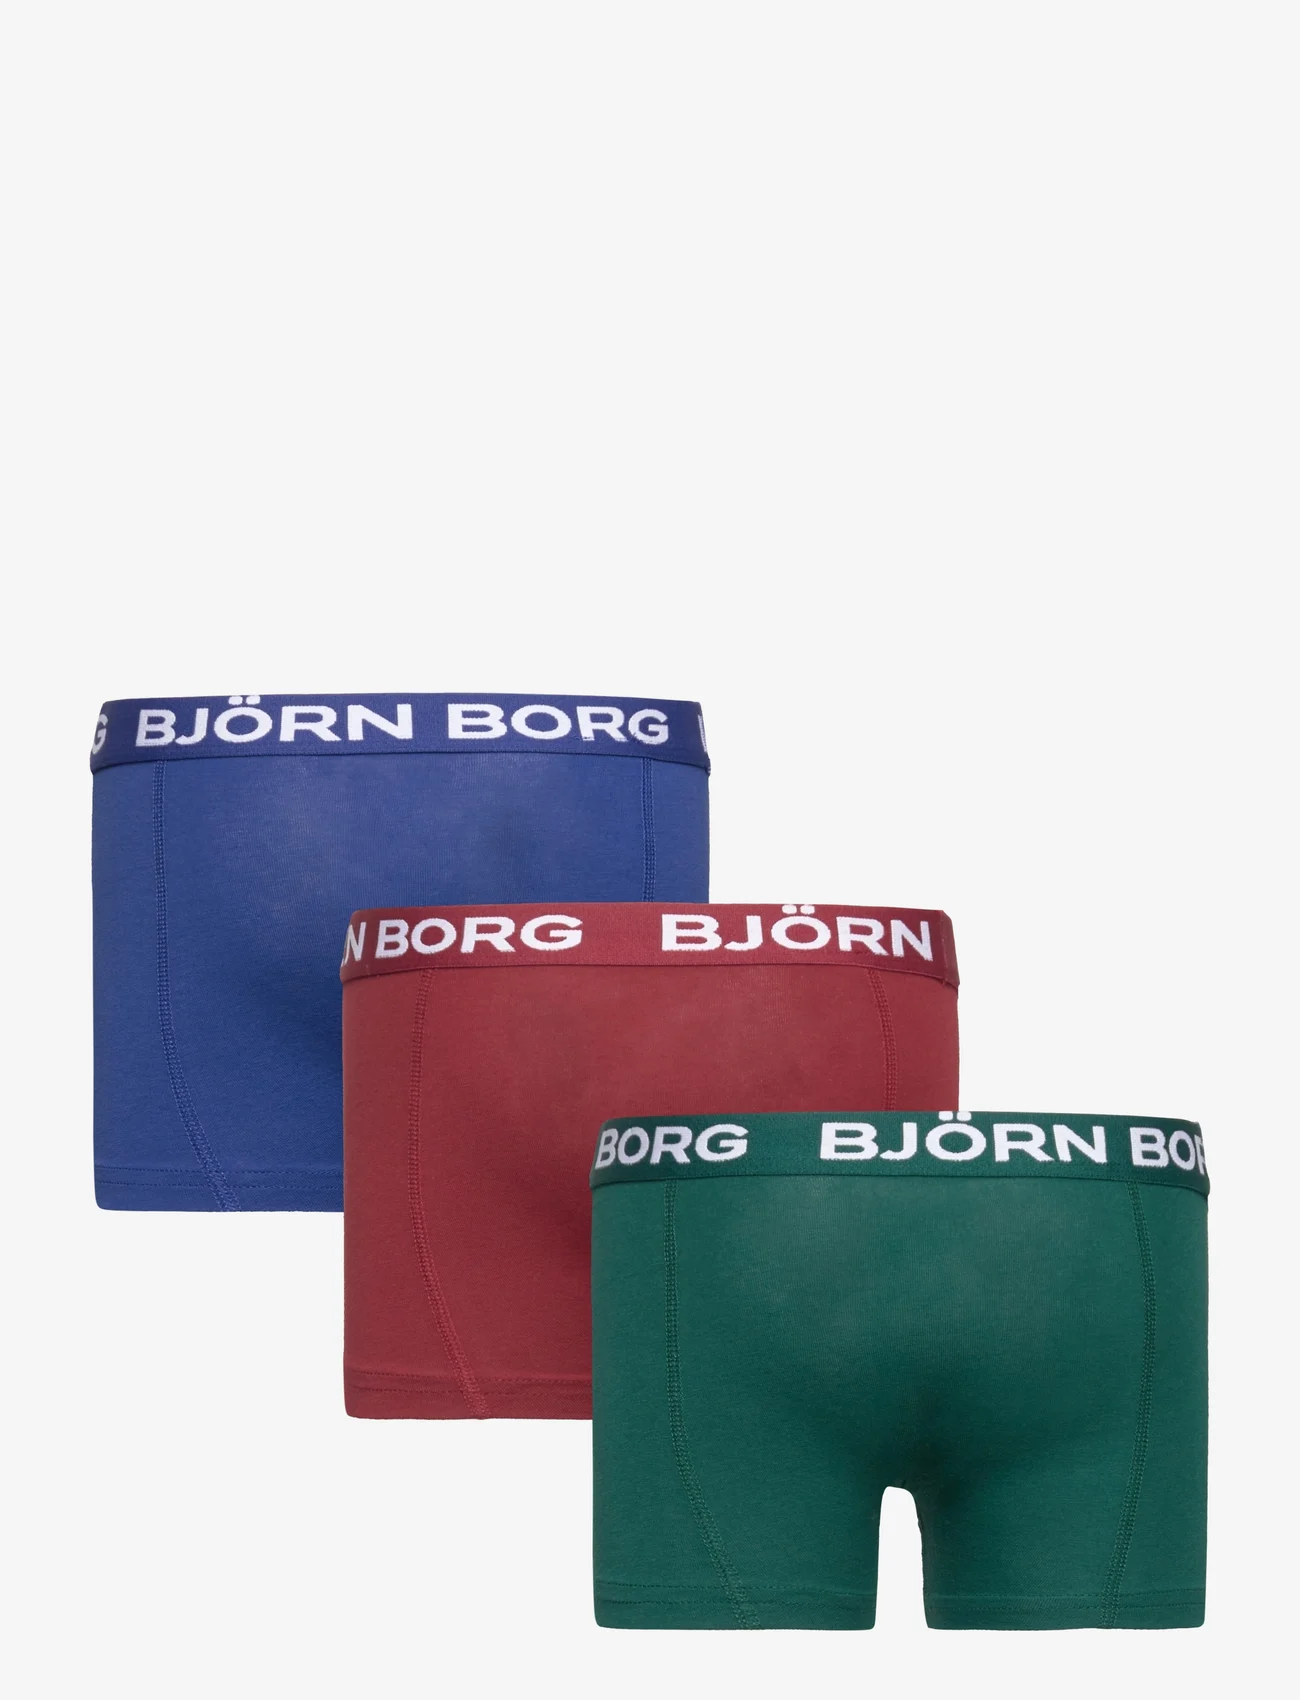 Björn Borg - CORE BOXER 3p - unterhosen - multipack 1 - 1